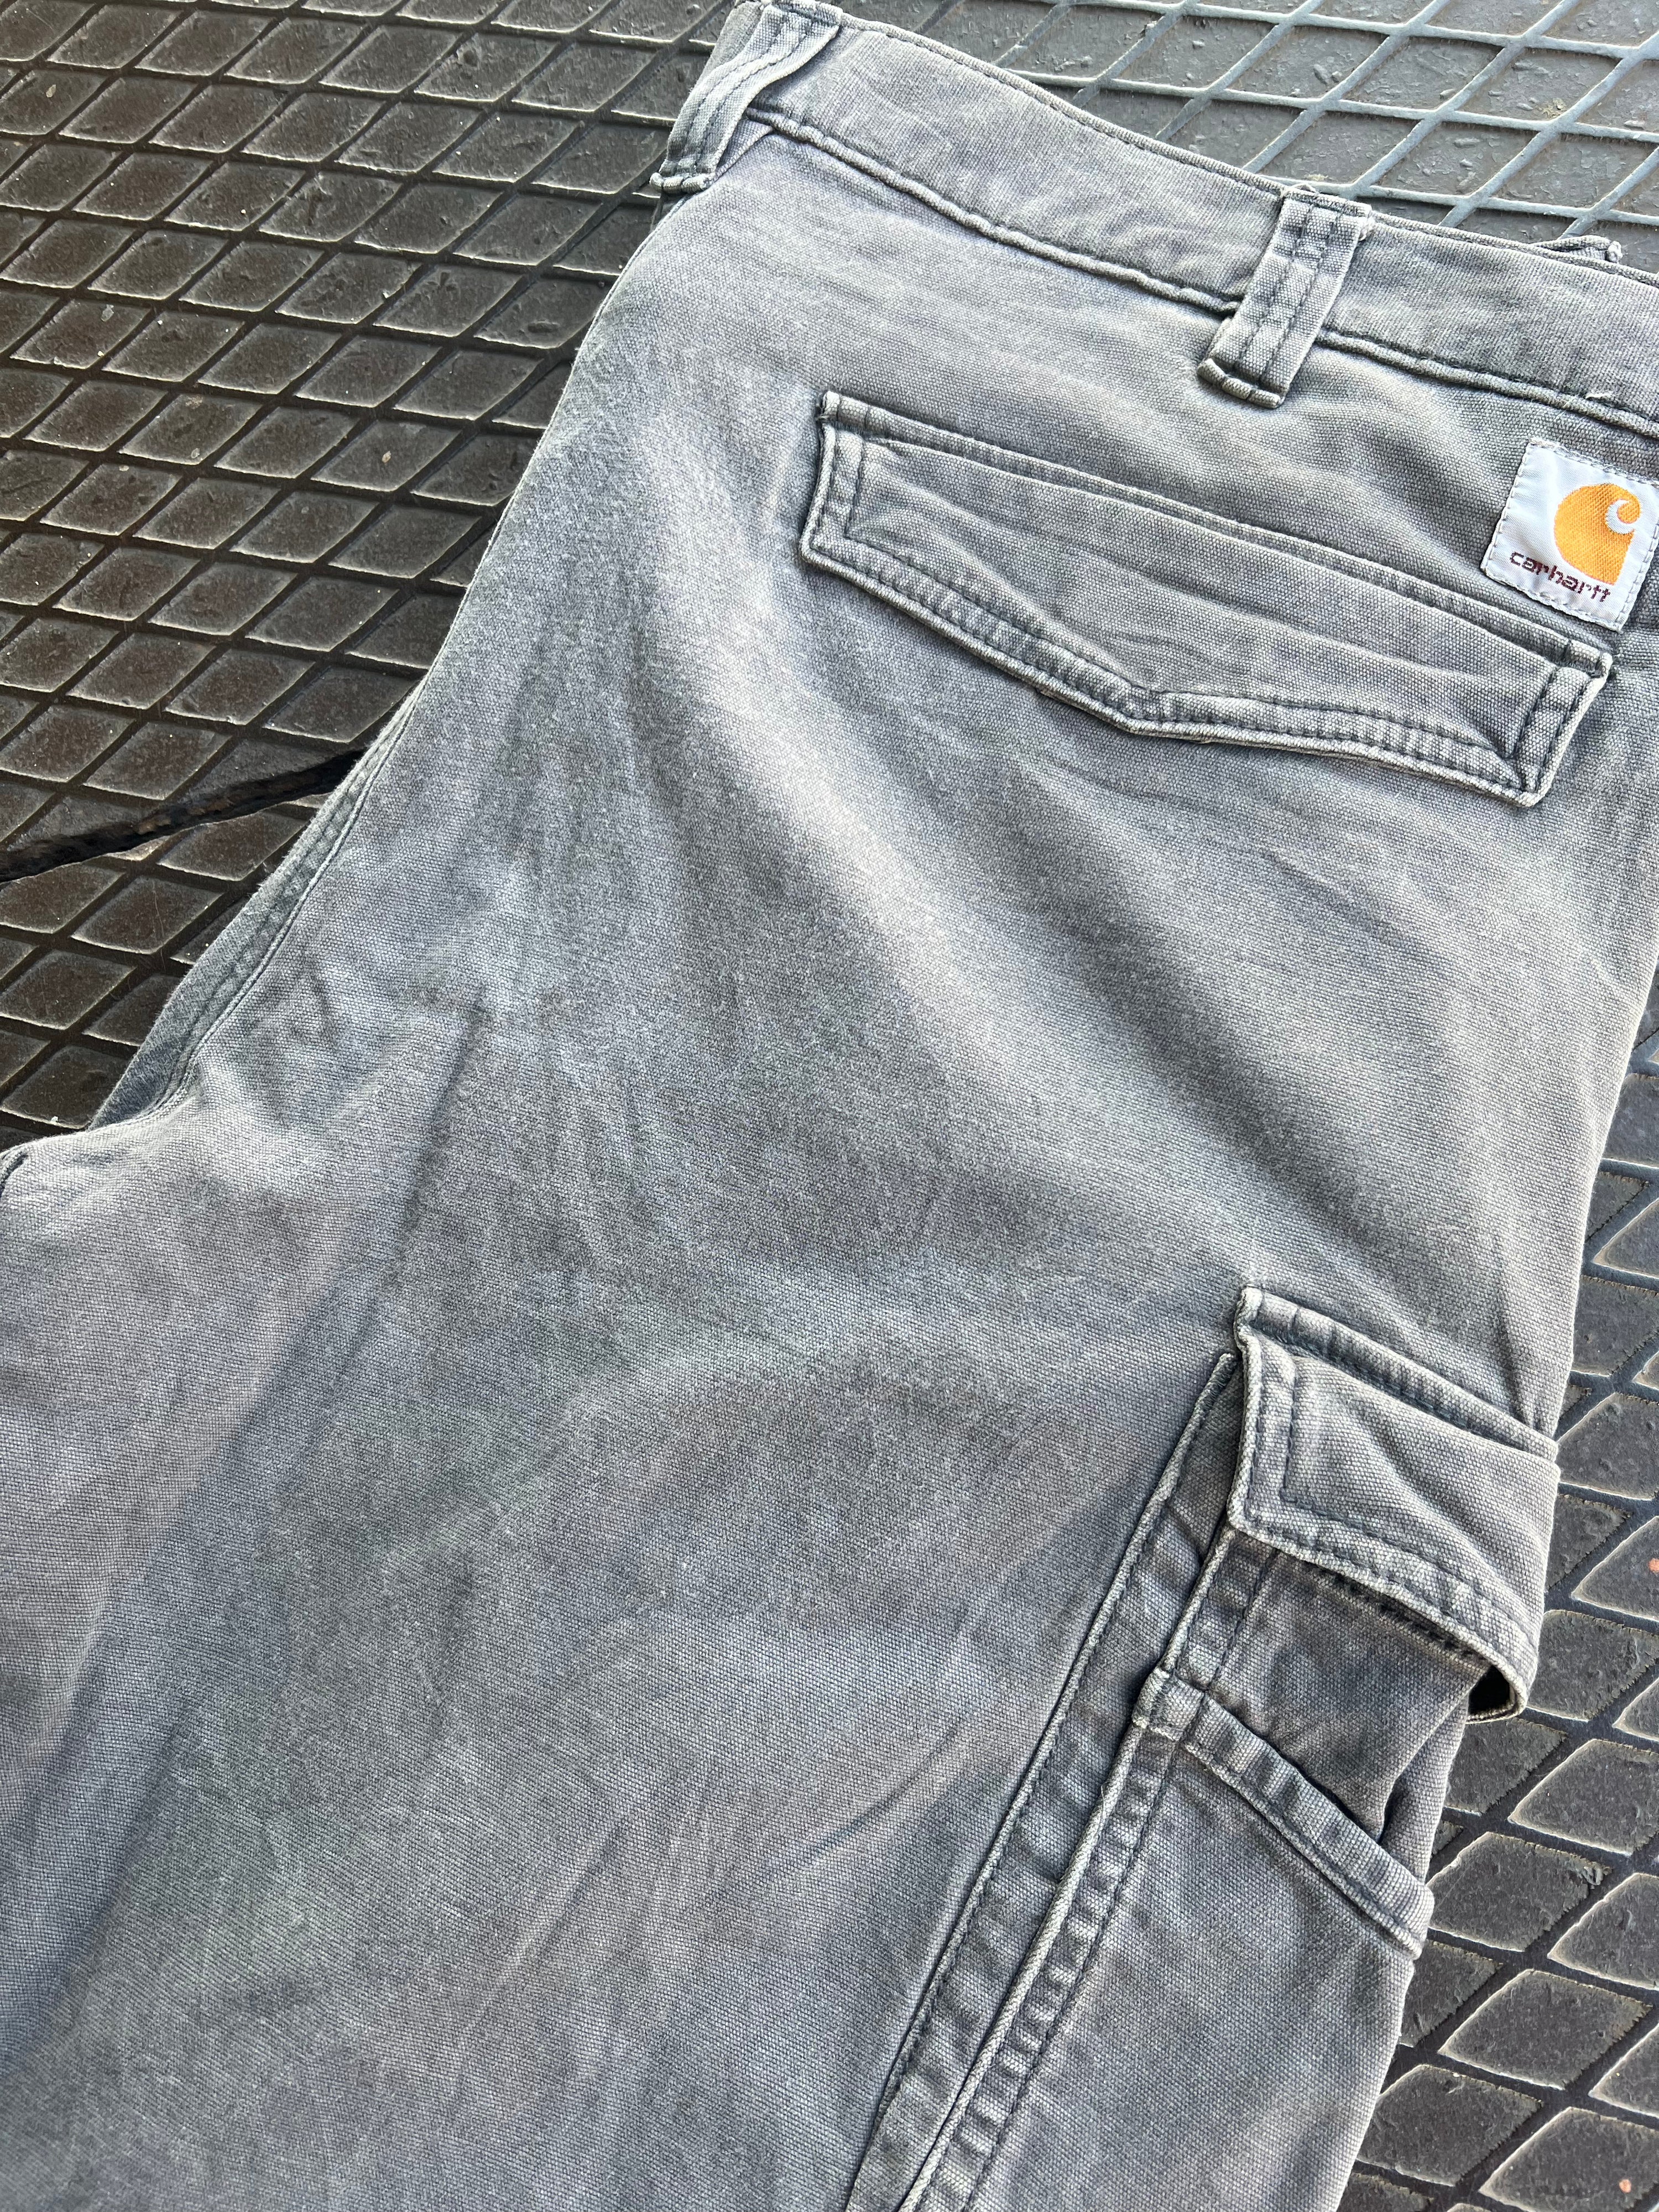 38 - Carhartt Cargo Shorts Faded Grey